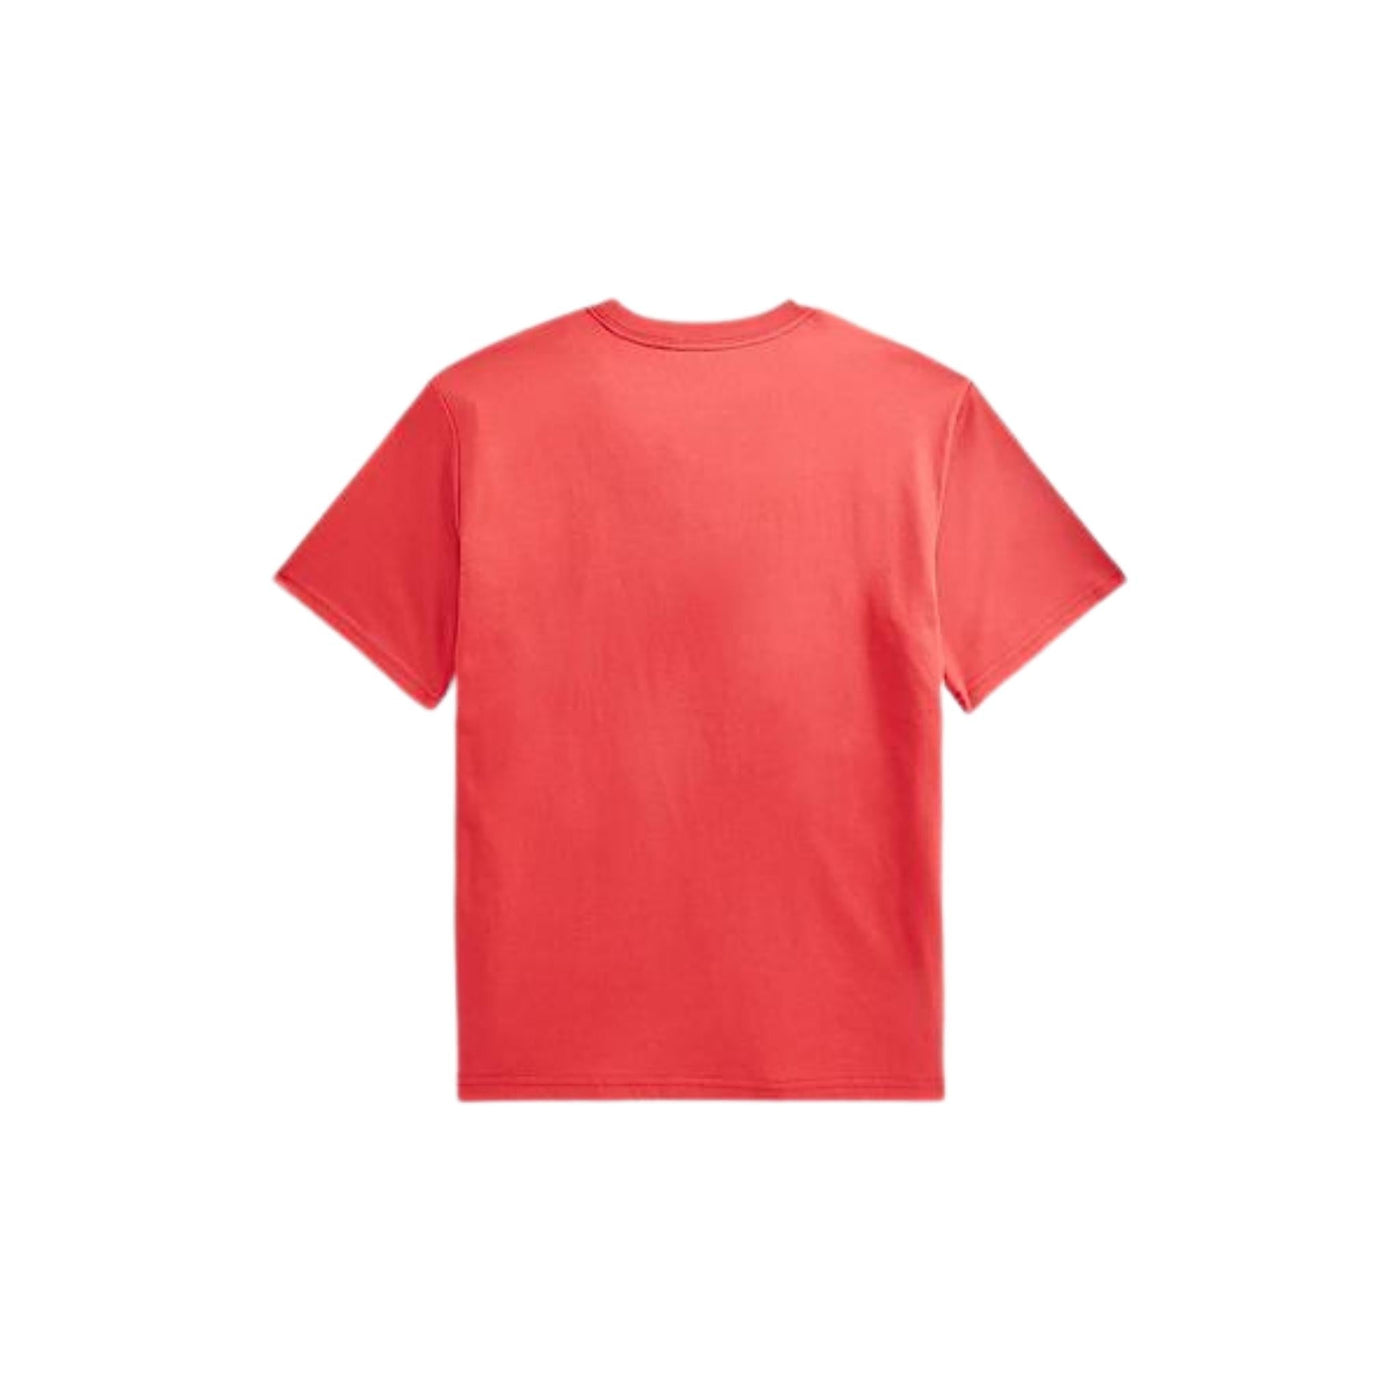 T-shirt bambino rossa Polo Ralph Lauren vista retro